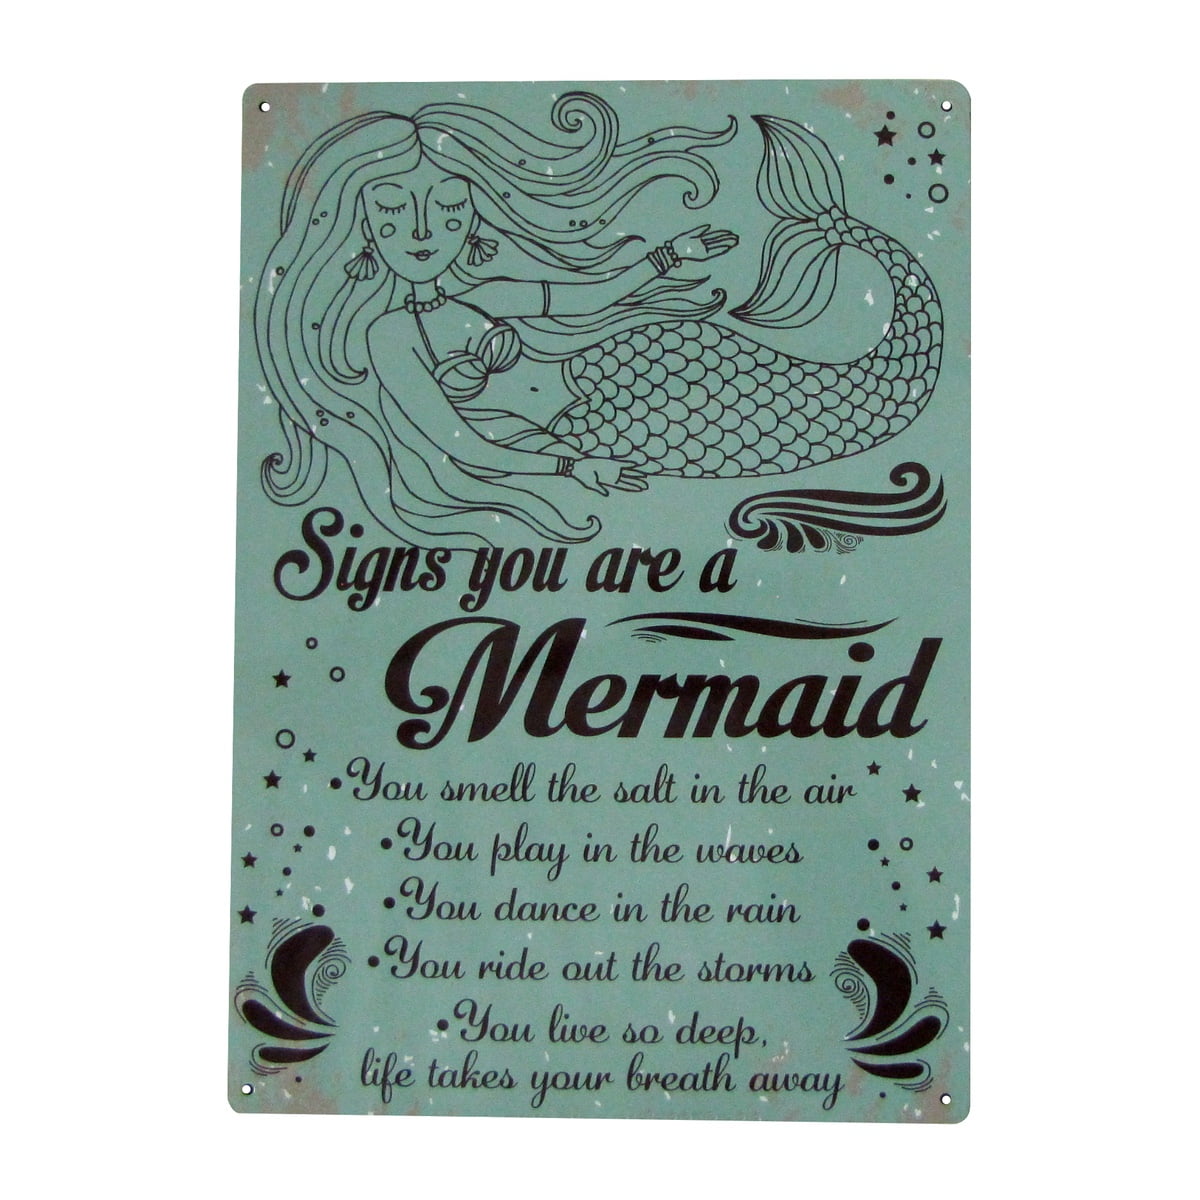 Mermaid Kisses Starfish Wishes 12" x 12" Metal Sign Coastal Nautical Home Decor 